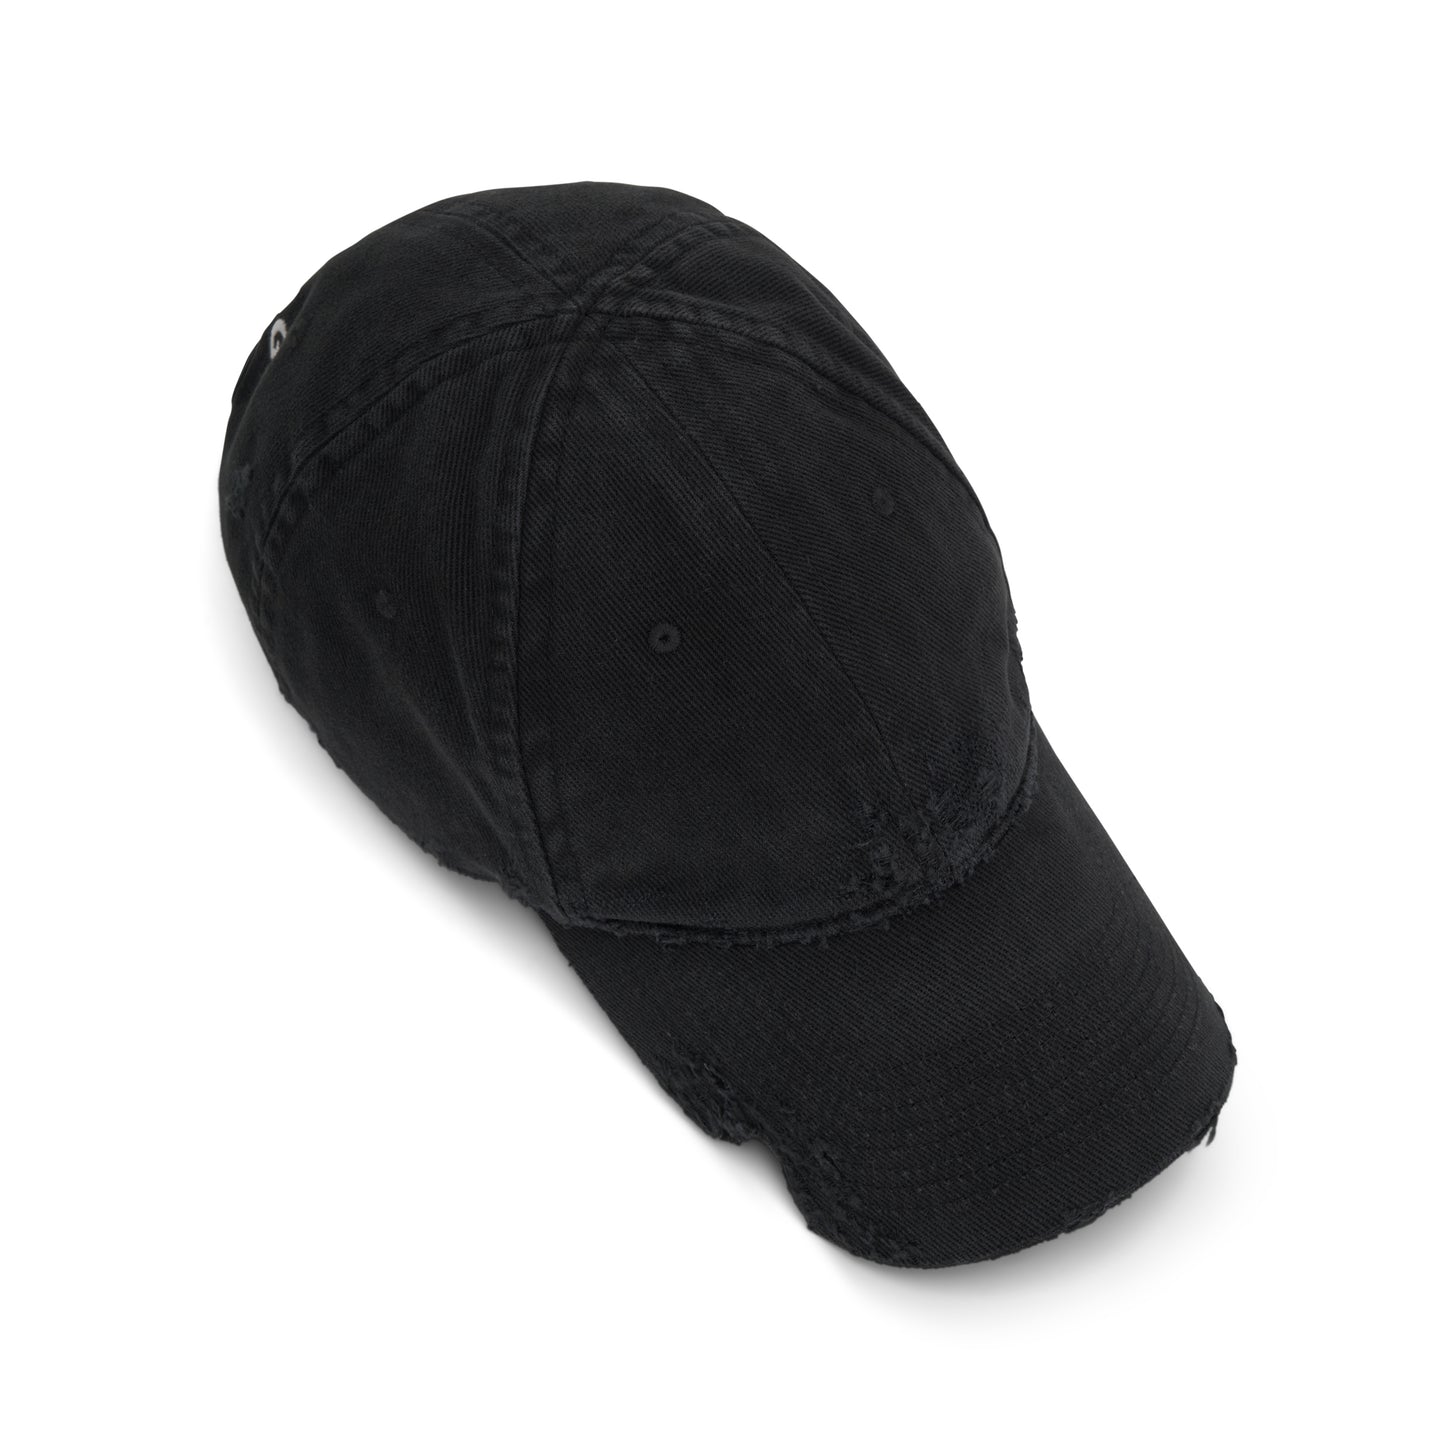 Hat Dog Bite Cap in Washed Black/White